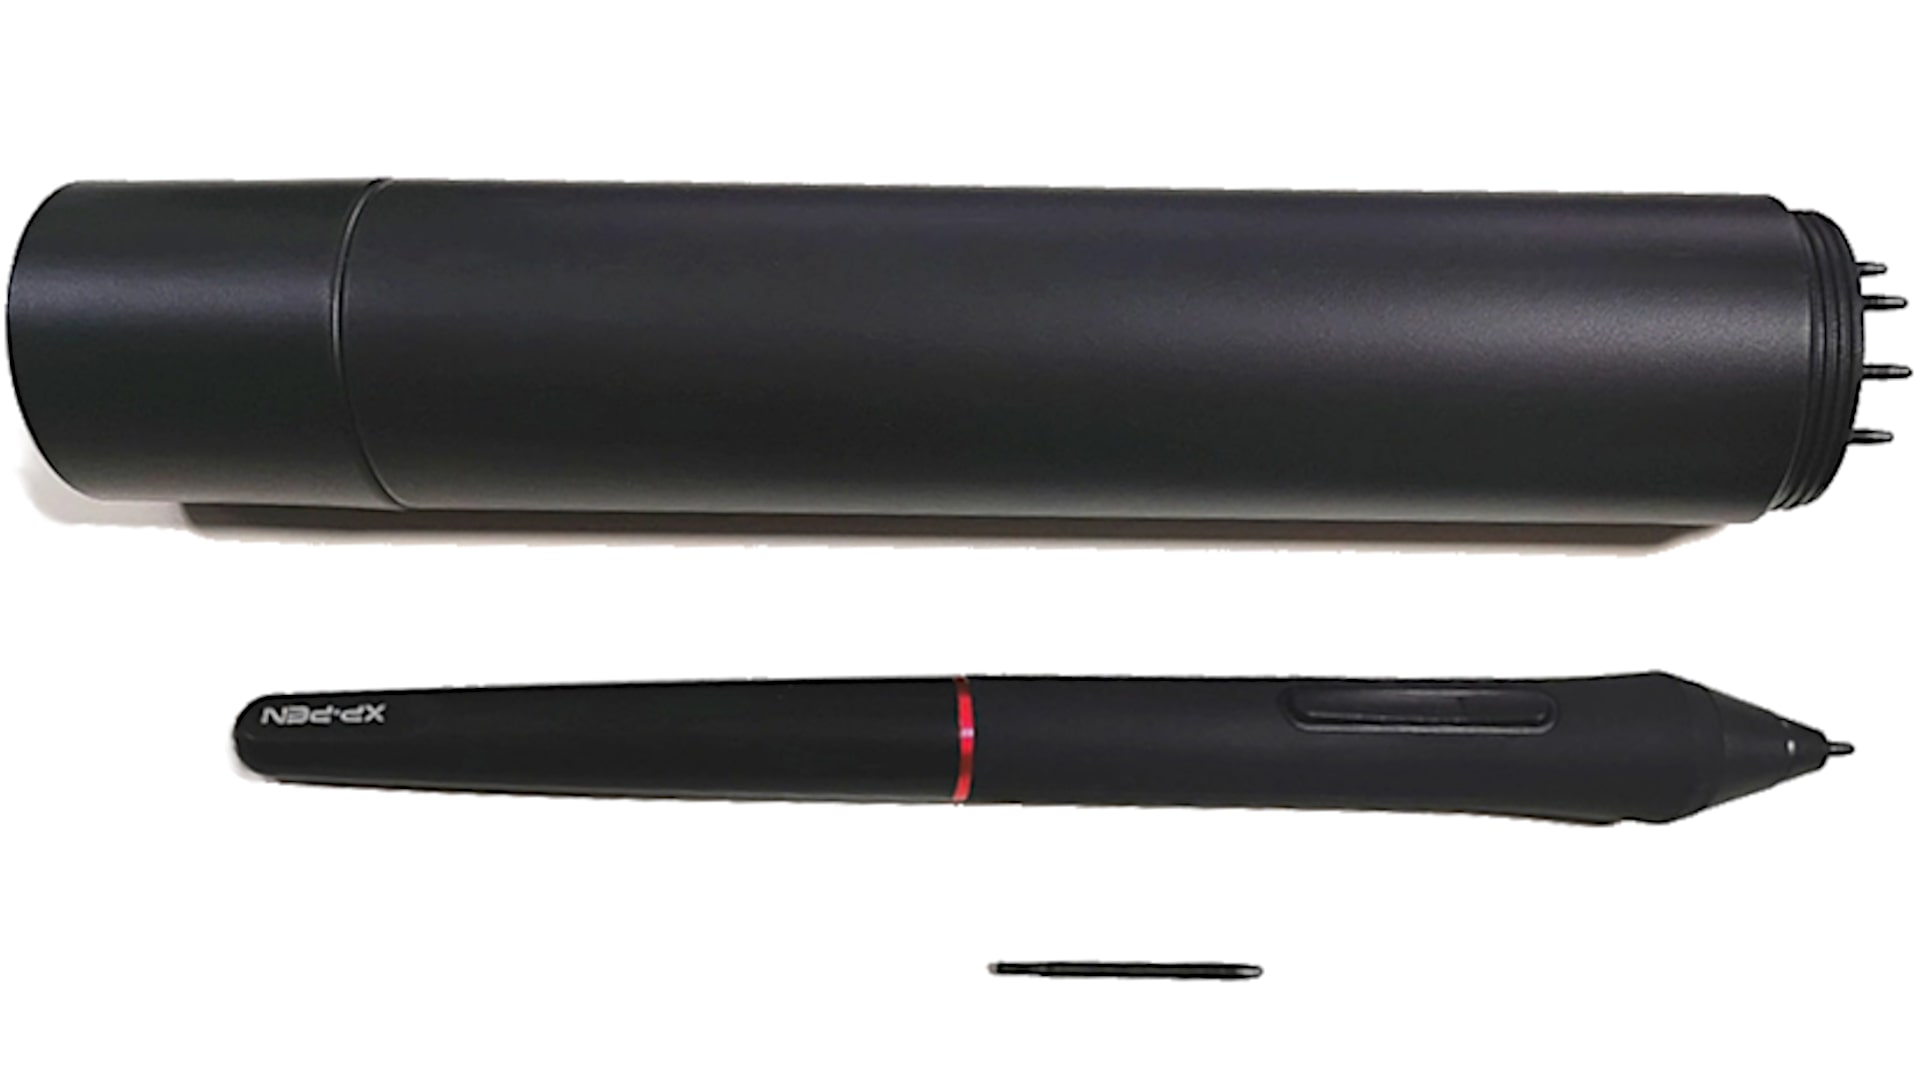 XP Pen Artist 22R Pro Pen with nibs holder